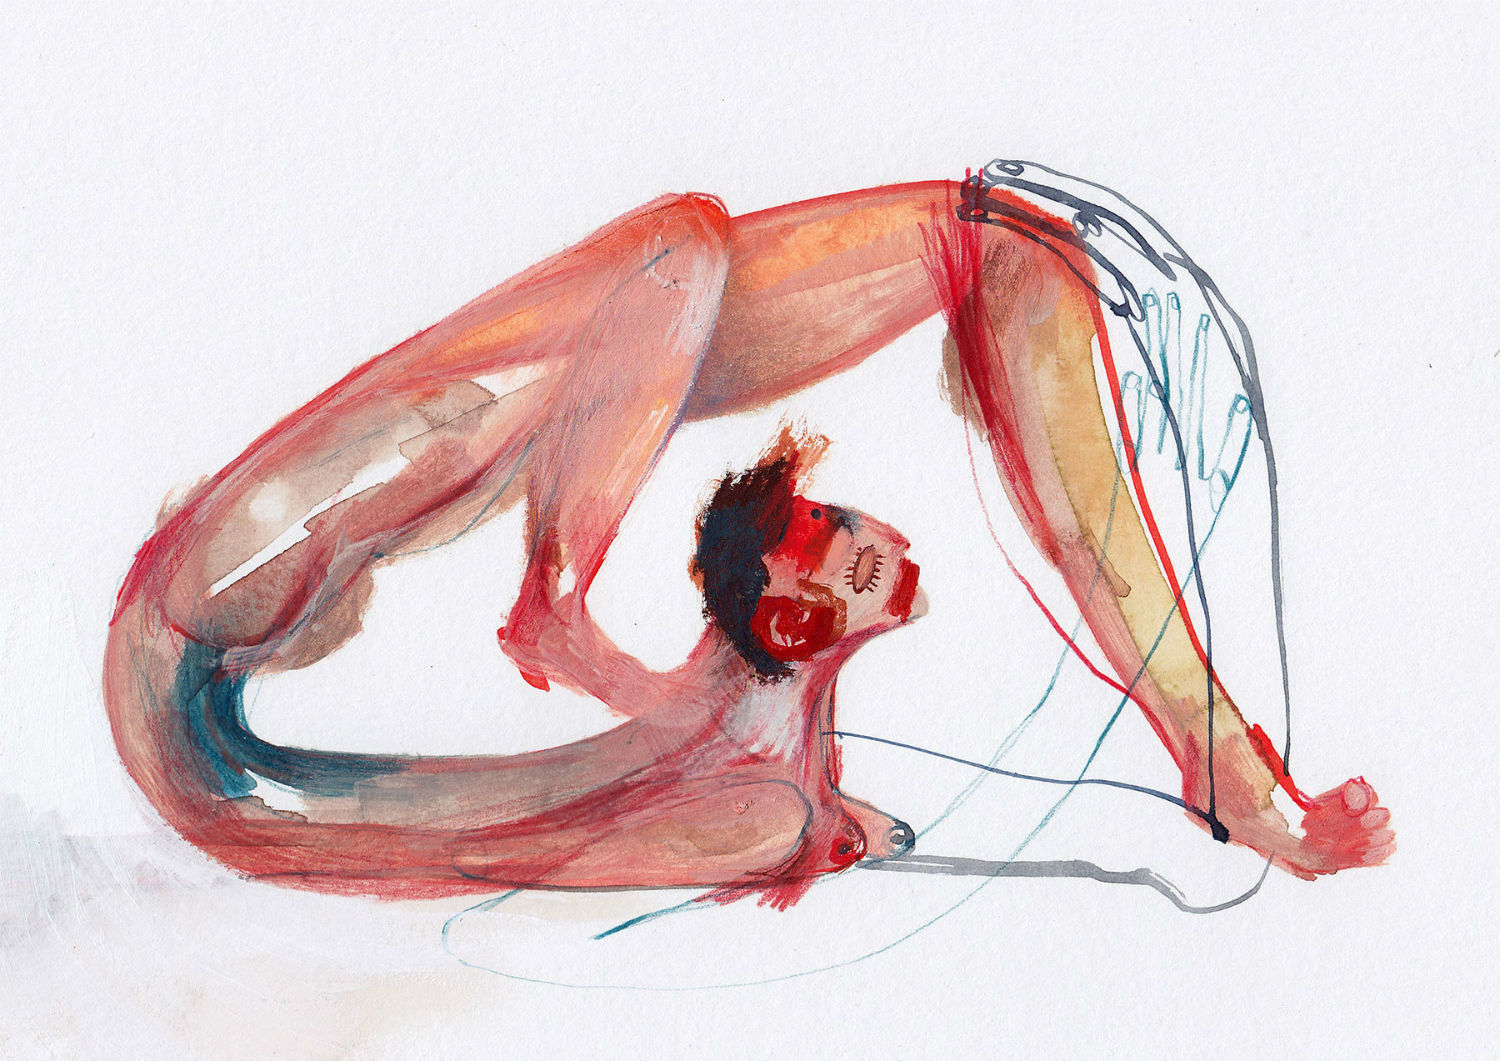 Marina González Eme nude painting body shape abstract 